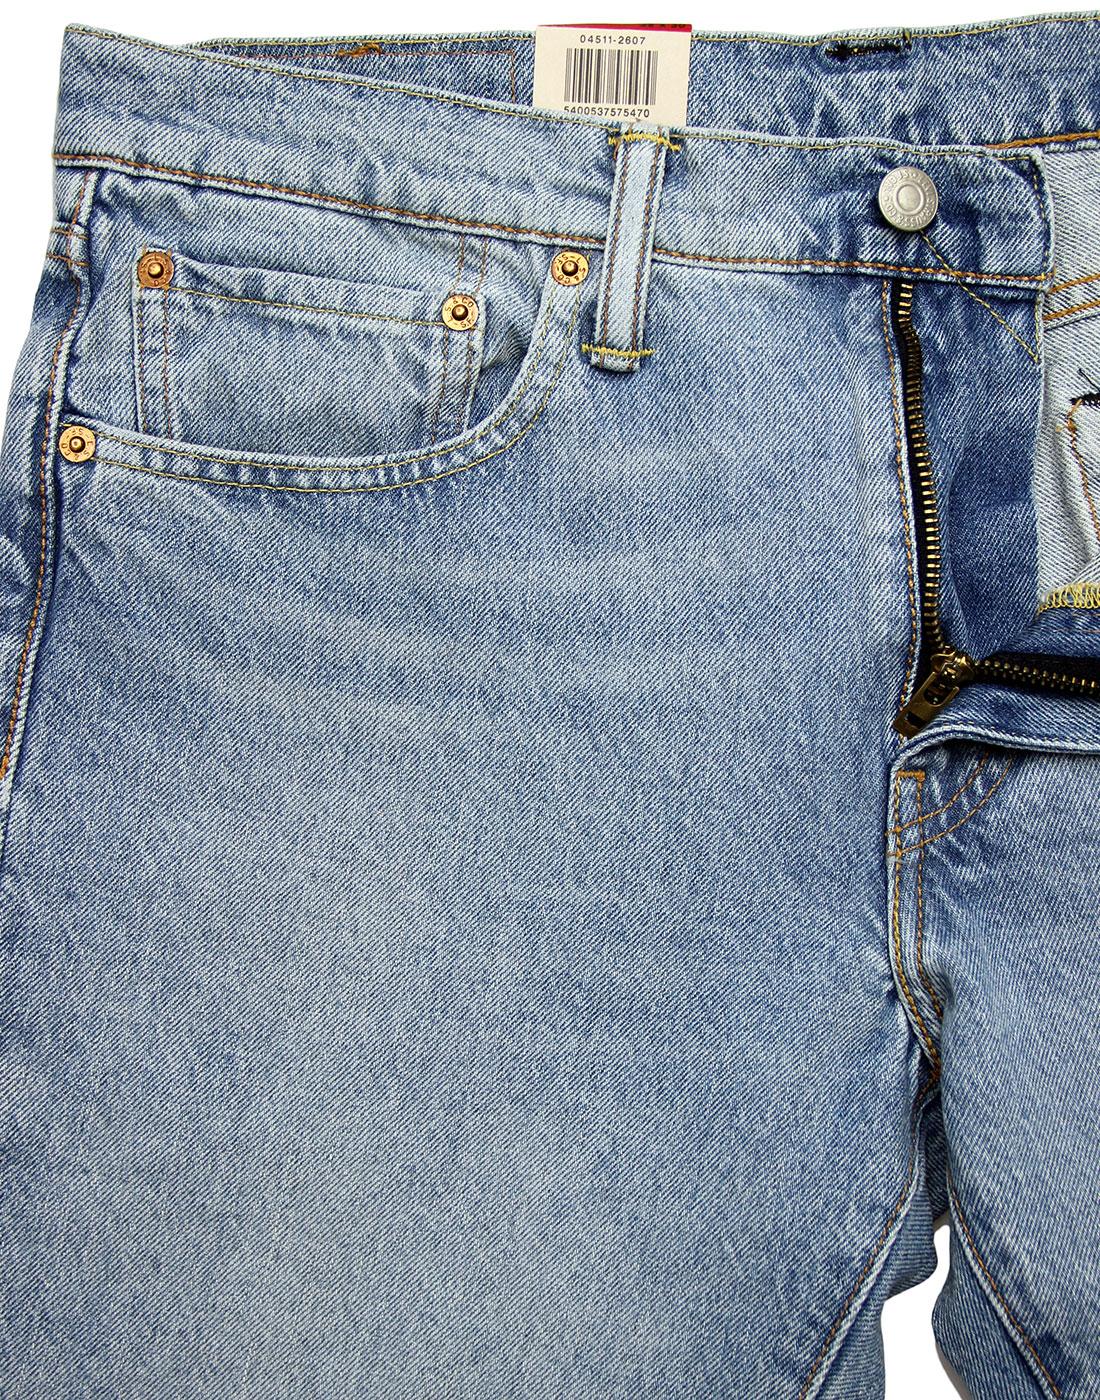 LEVI'S 511 Retro Warp Stretch Denim Jeans in Ocean Parkway